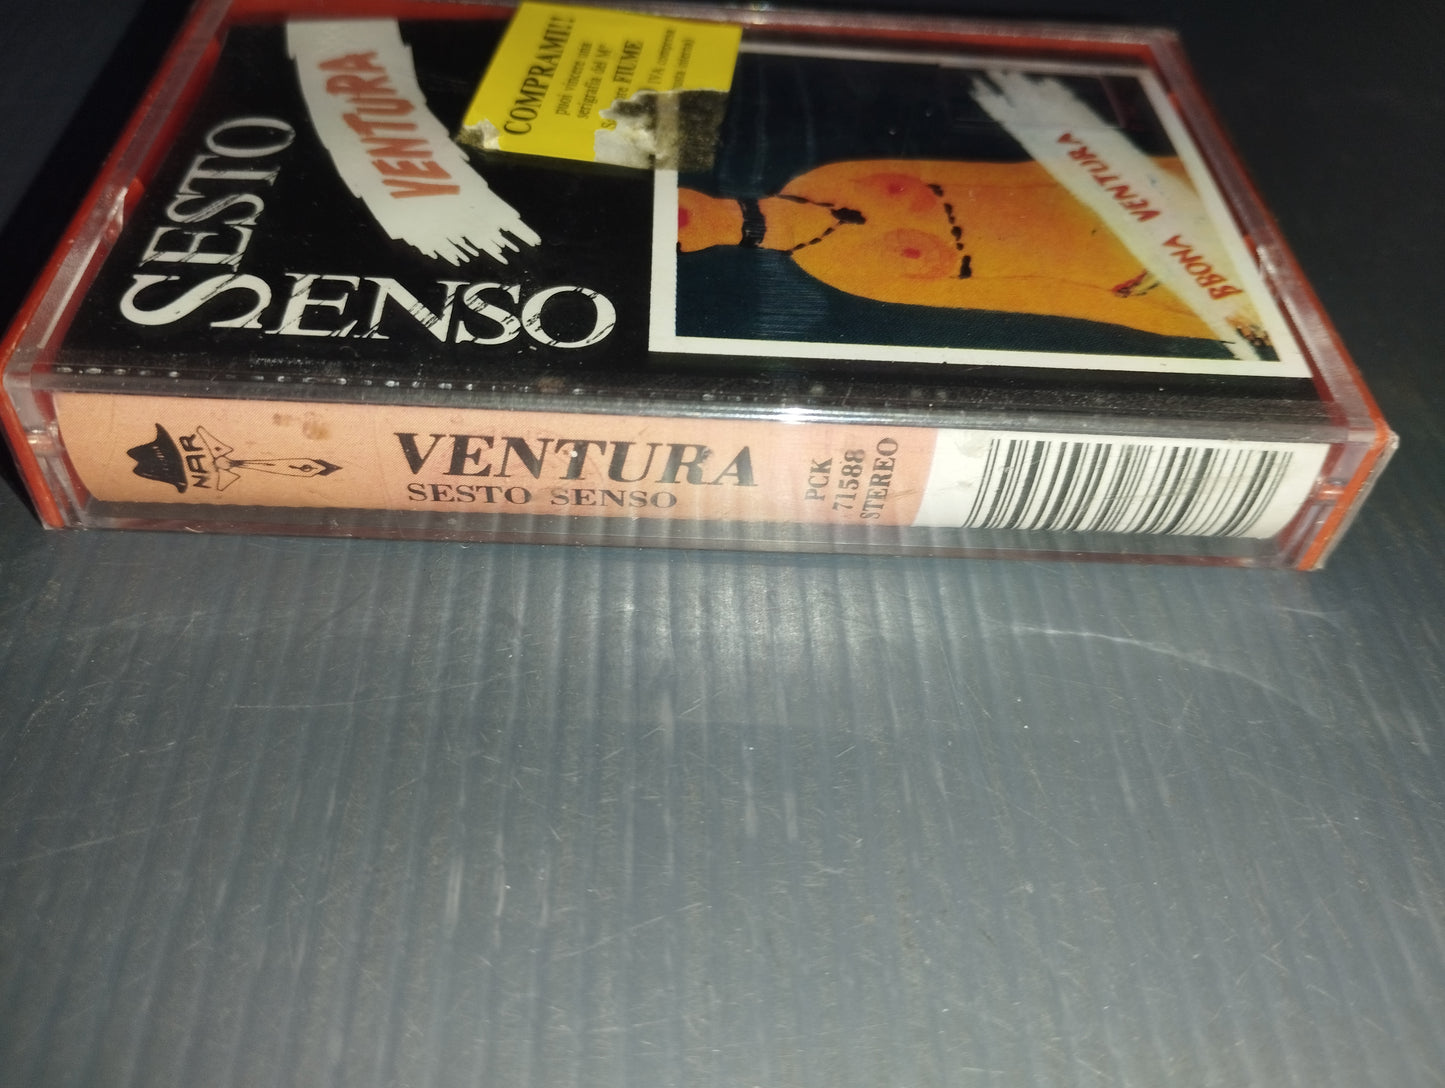 Sixth Sense Ventura Music Sealed cassette